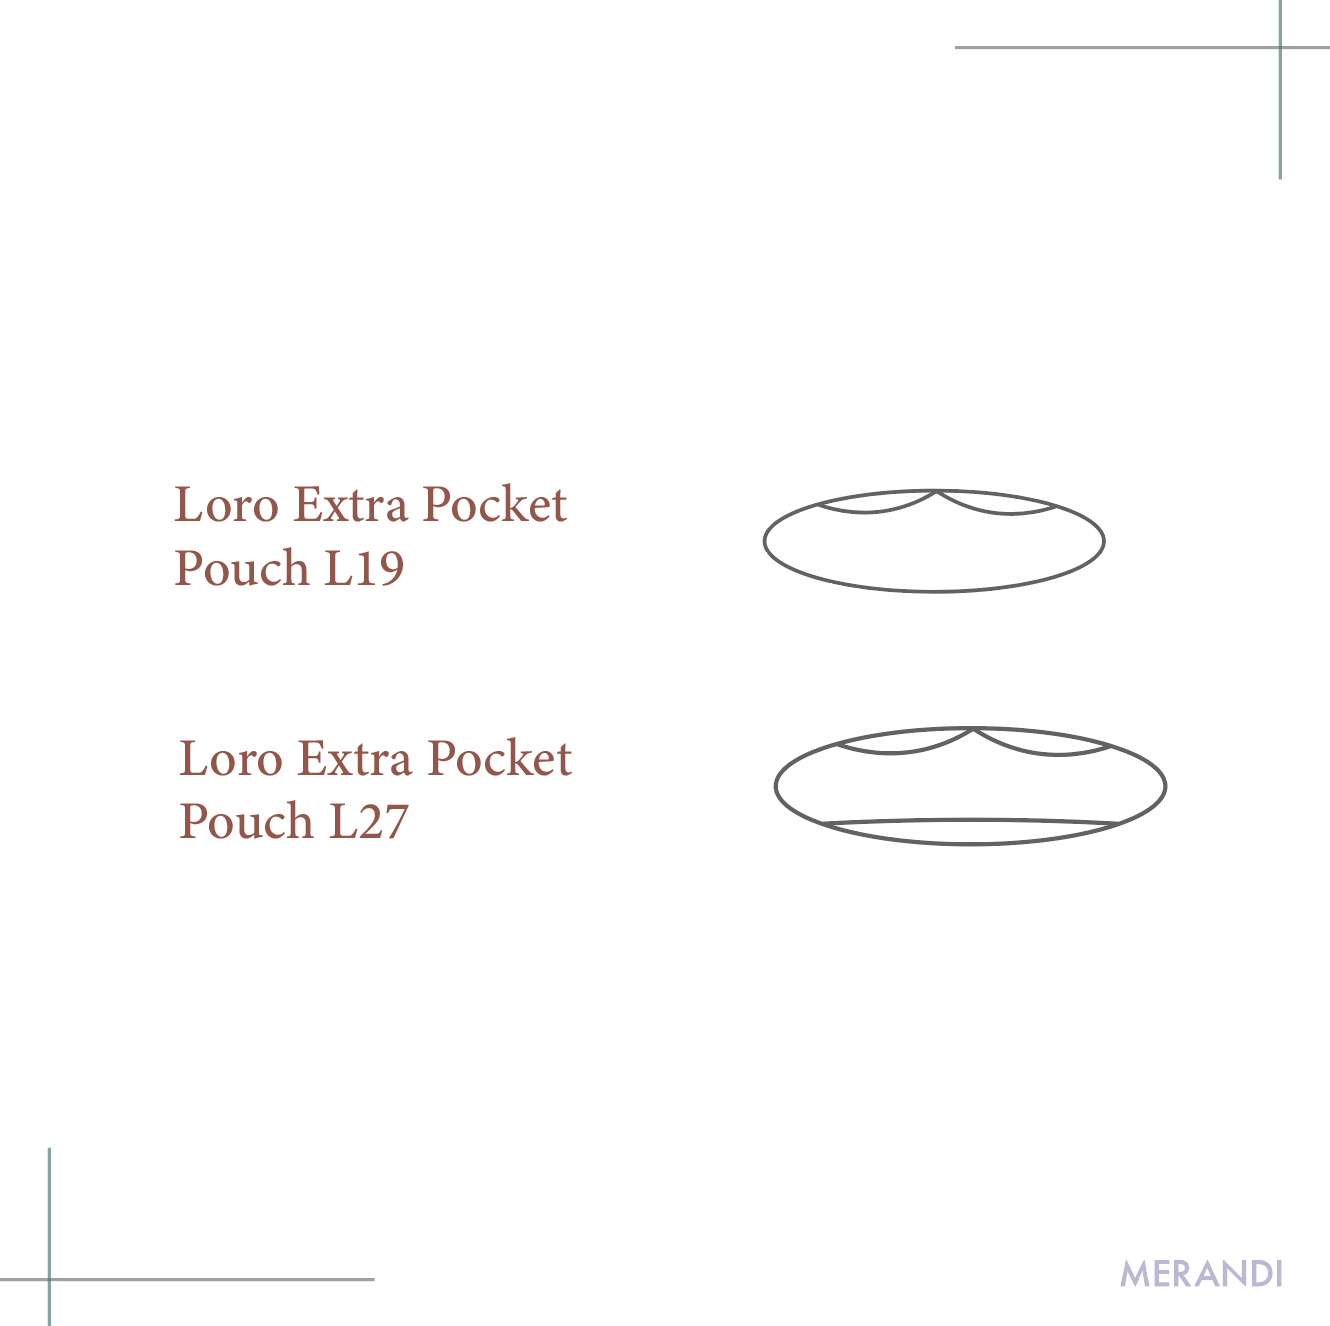 Loro Extra Pocket Pouch